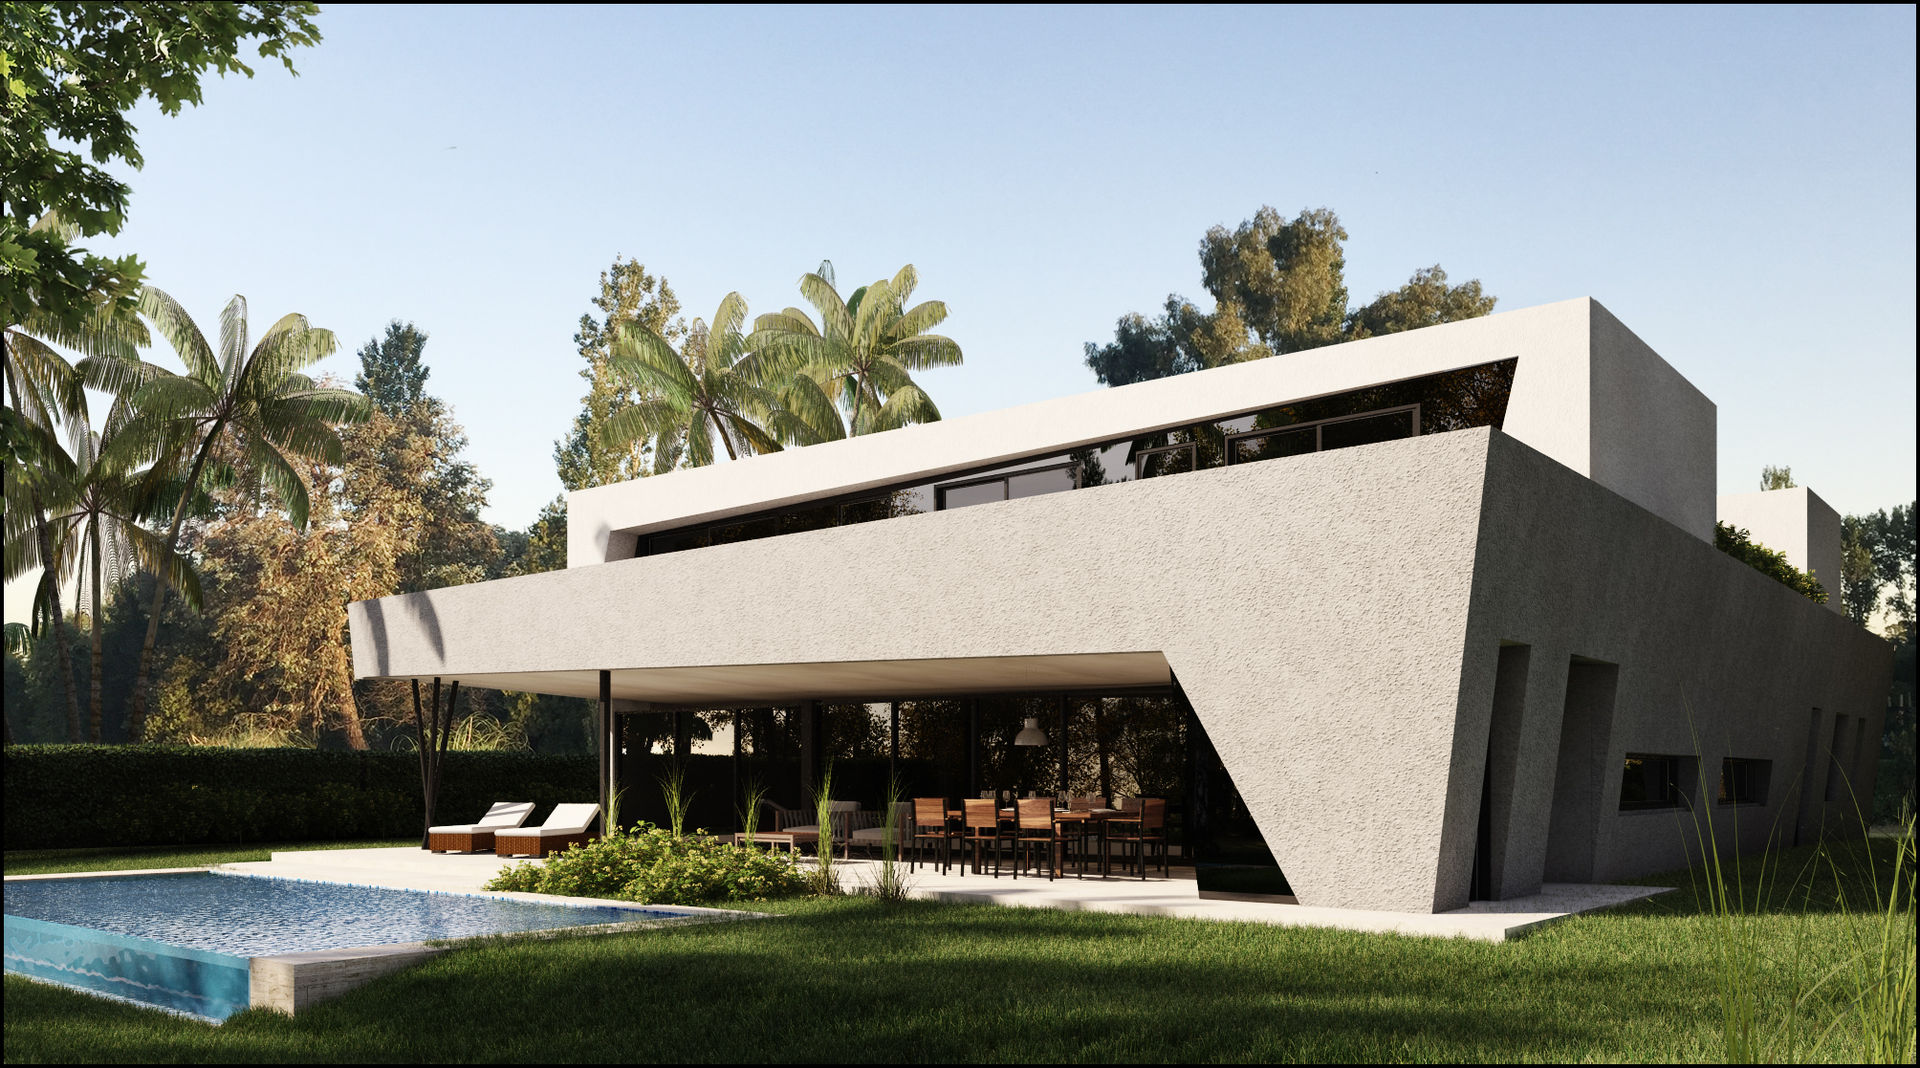 ESTILO MODERNO DE VANGUARDIA Maximiliano Lago Arquitectura - Estudio Azteca Casas de estilo moderno